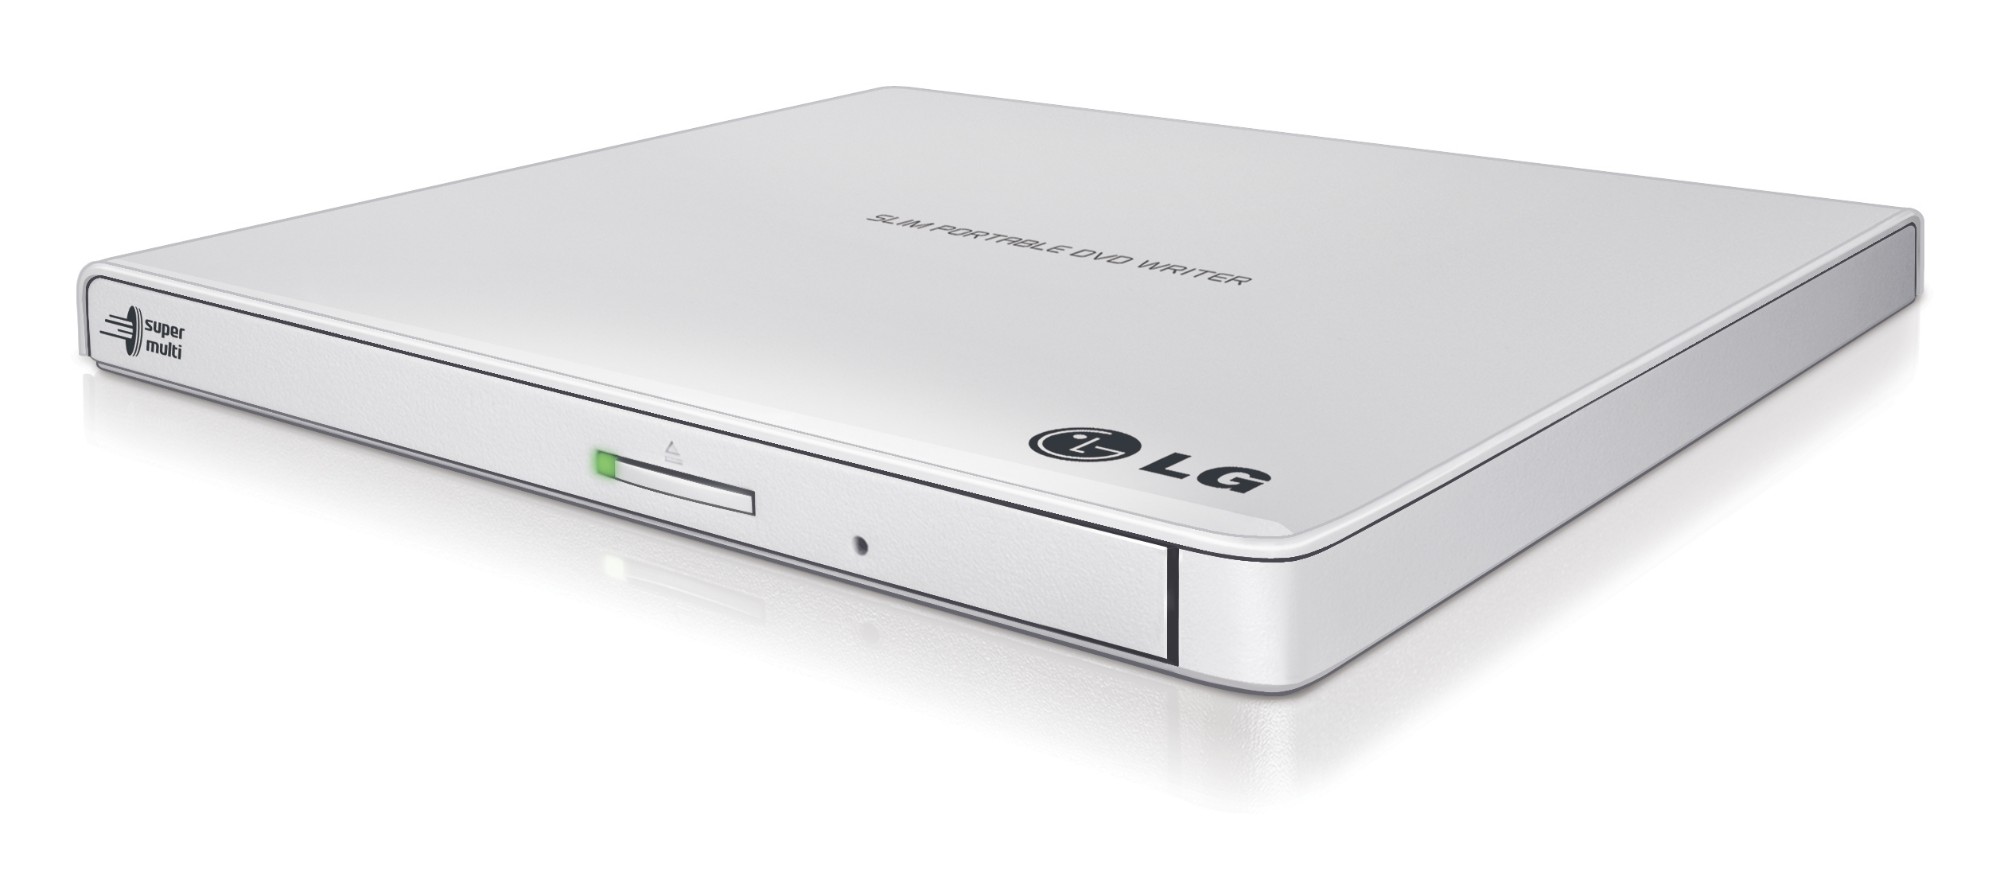 GP65NW60 LG External Slim DVDRW GP65NW60 8X USB 9.5mm White with Cyberlink Software RTL